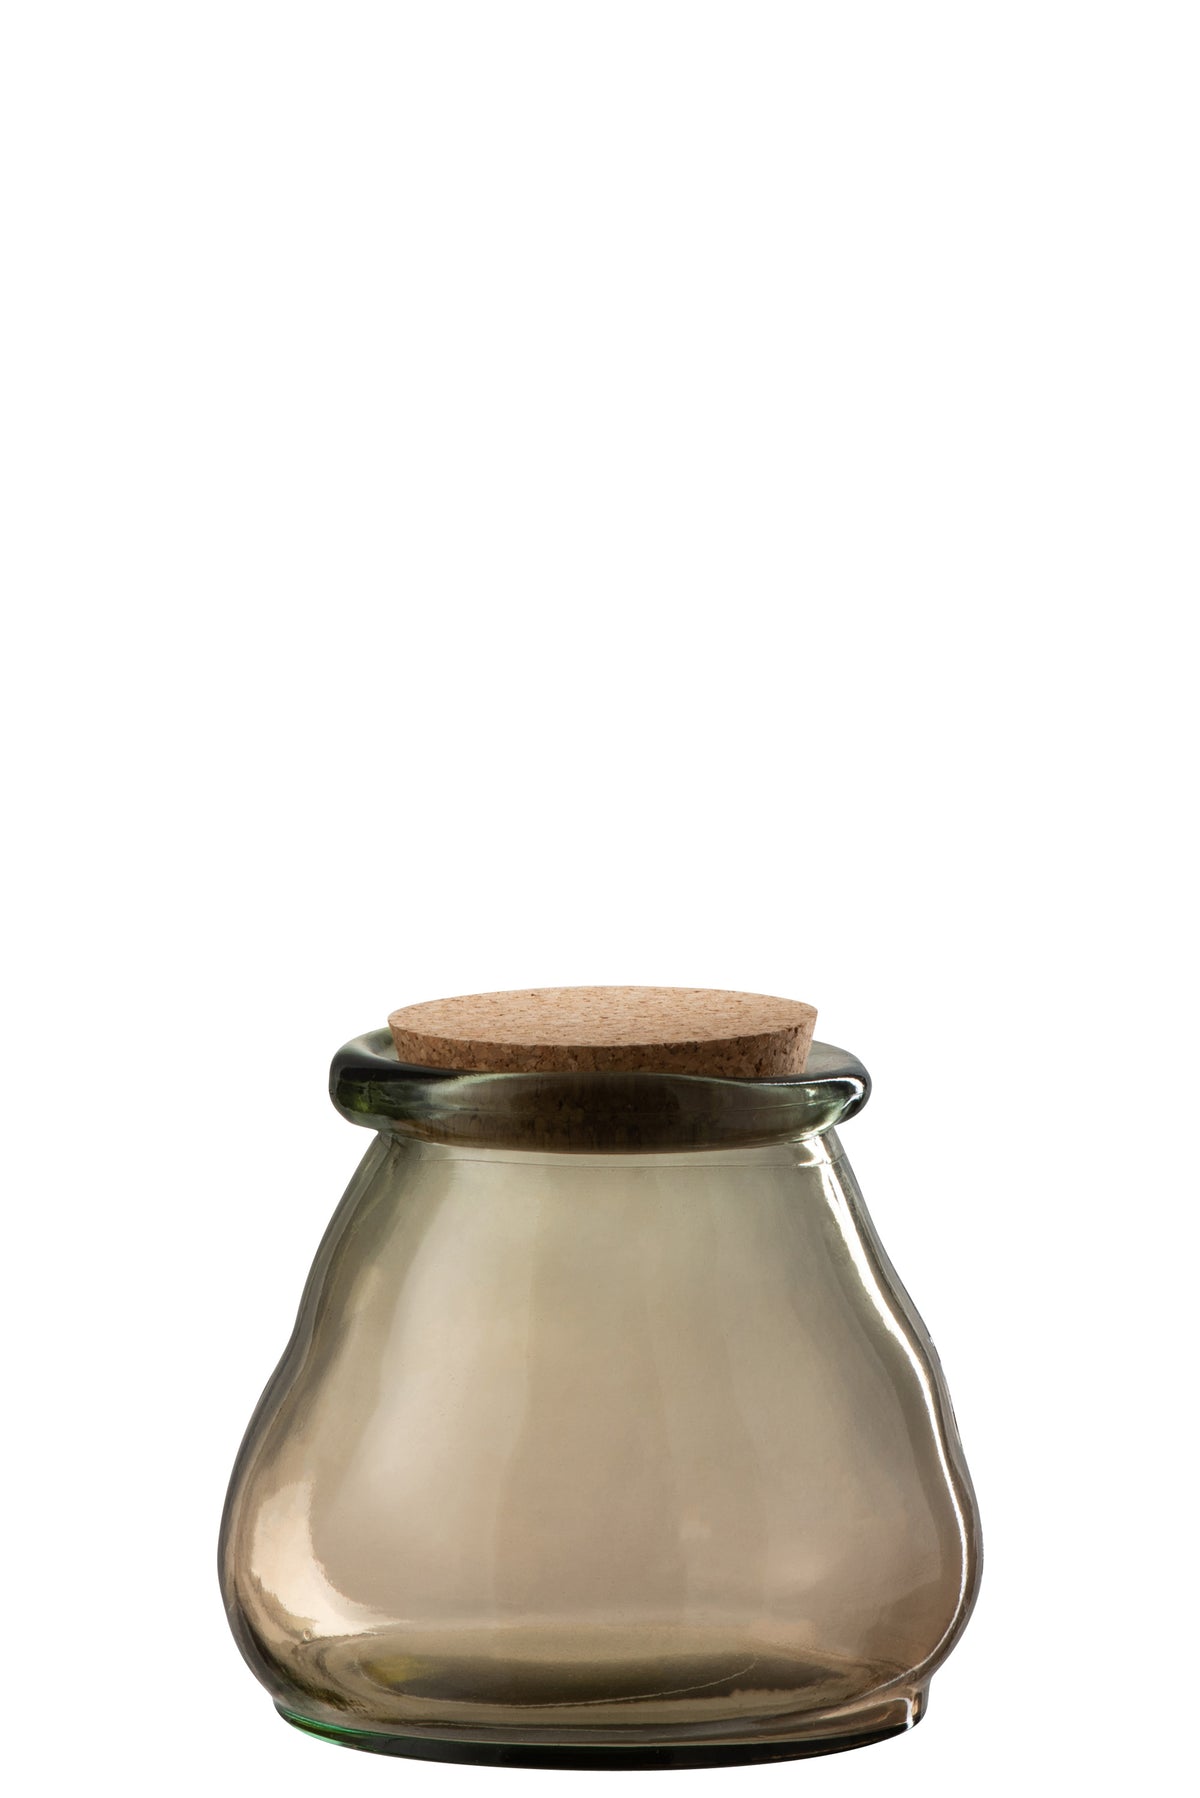 Grand pot de stockage en verre brun clair - (4209)